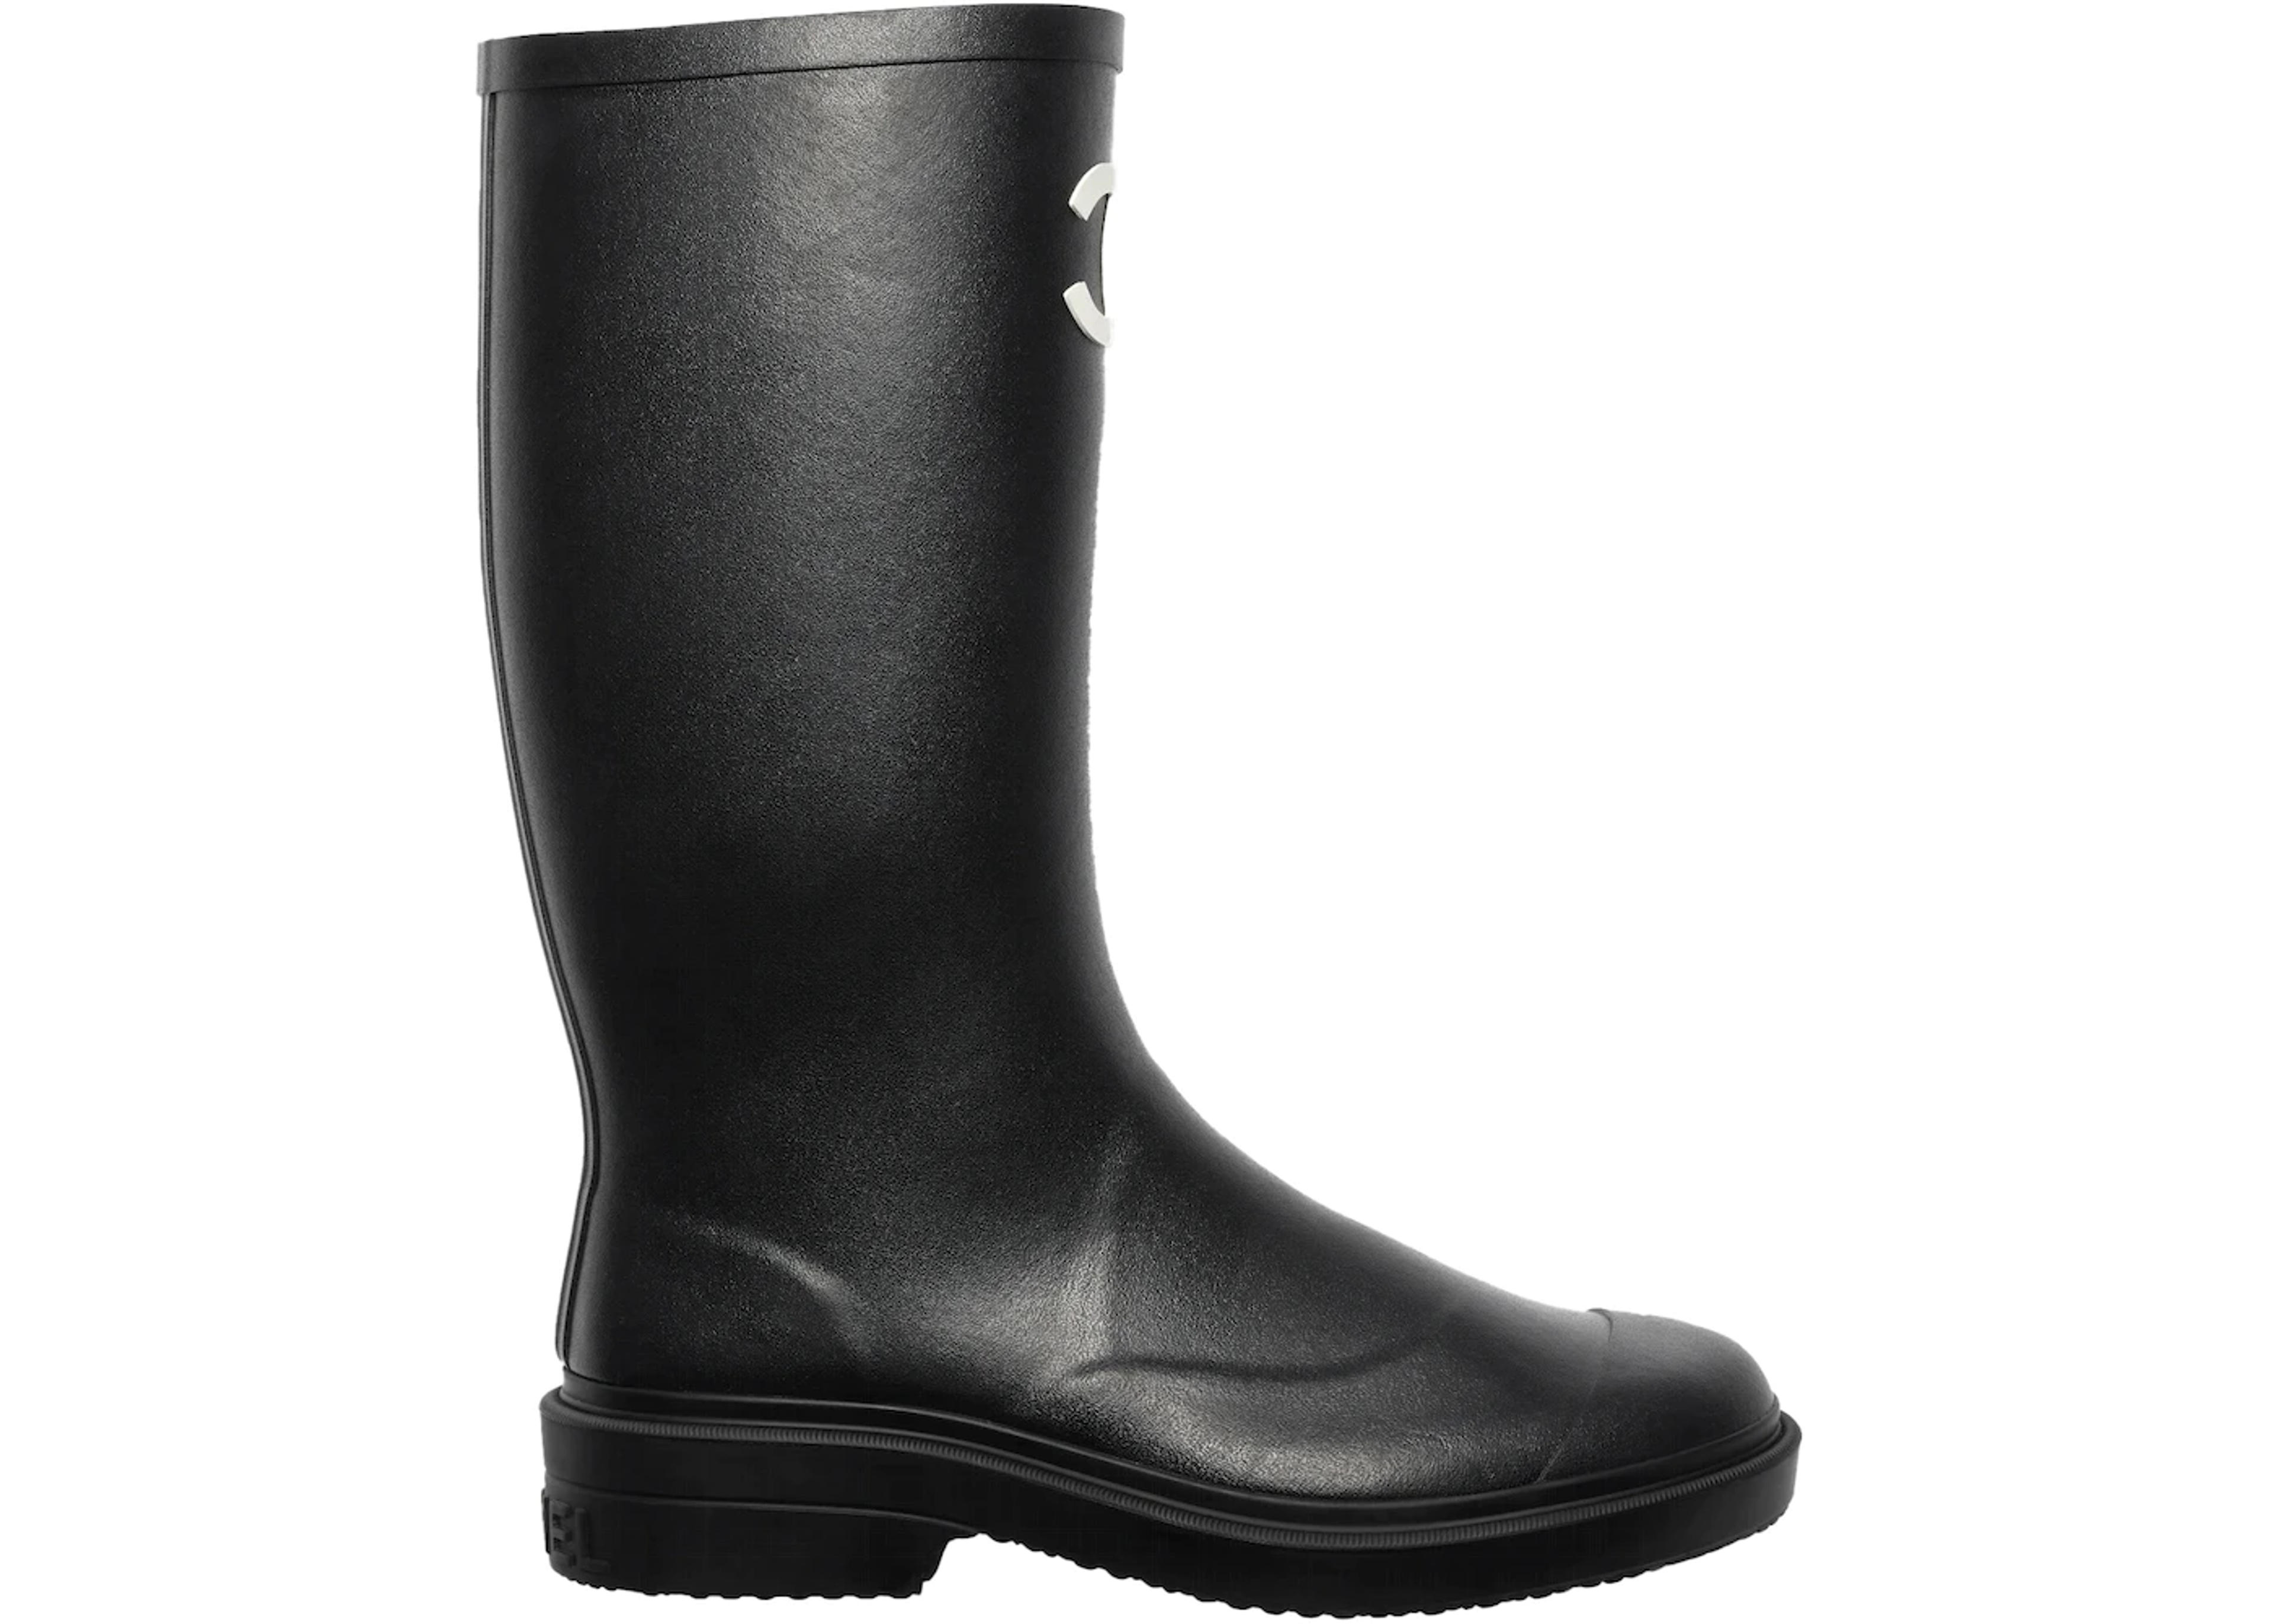 Chanel Rubber Rain Boots Black - G39620 X56326 94305 - US